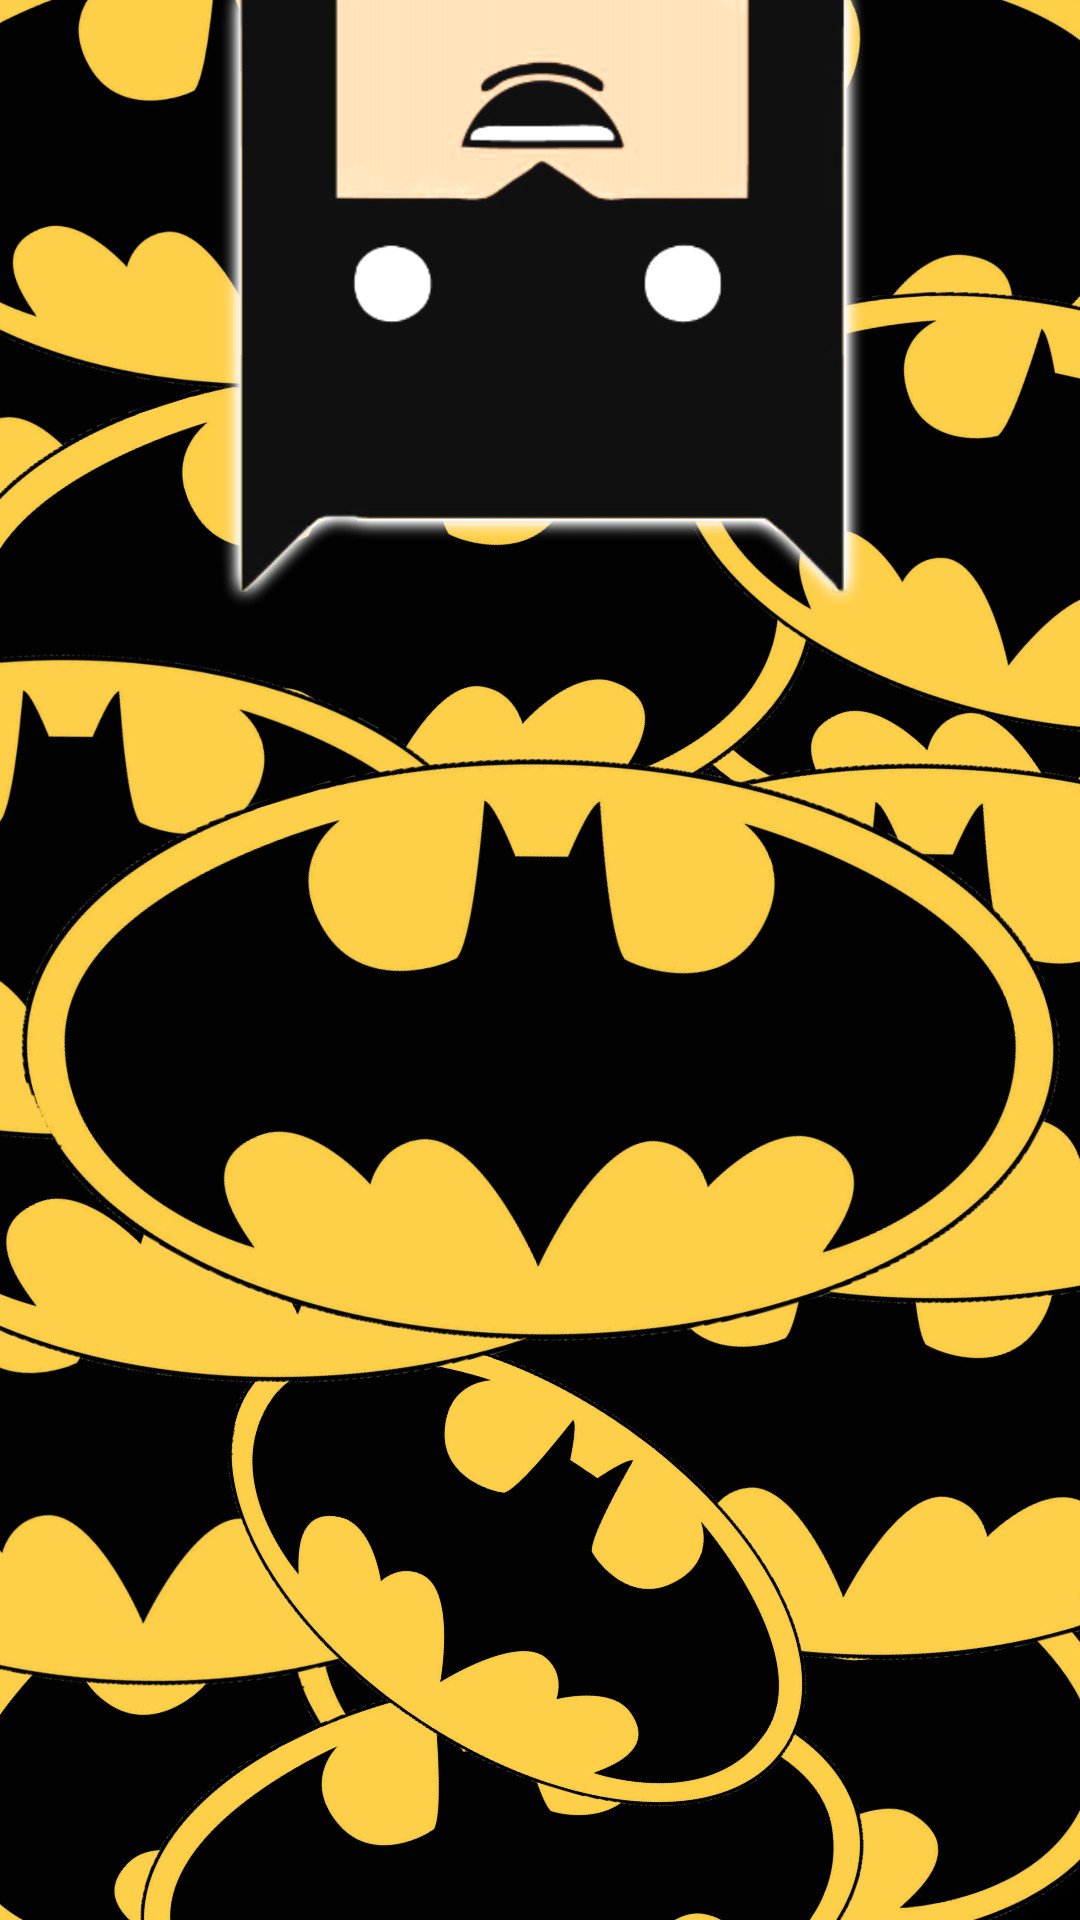 Batman phone wallpaper, Batman phone background, Batman phone home screen, Batman phone lock screen, Batman phone wallpaper, Batman phone wallpaper for android, Batman phone wallpaper for iphone, Batman phone wallpaper for galaxy, Batman phone wallpaper for huawei - Batman